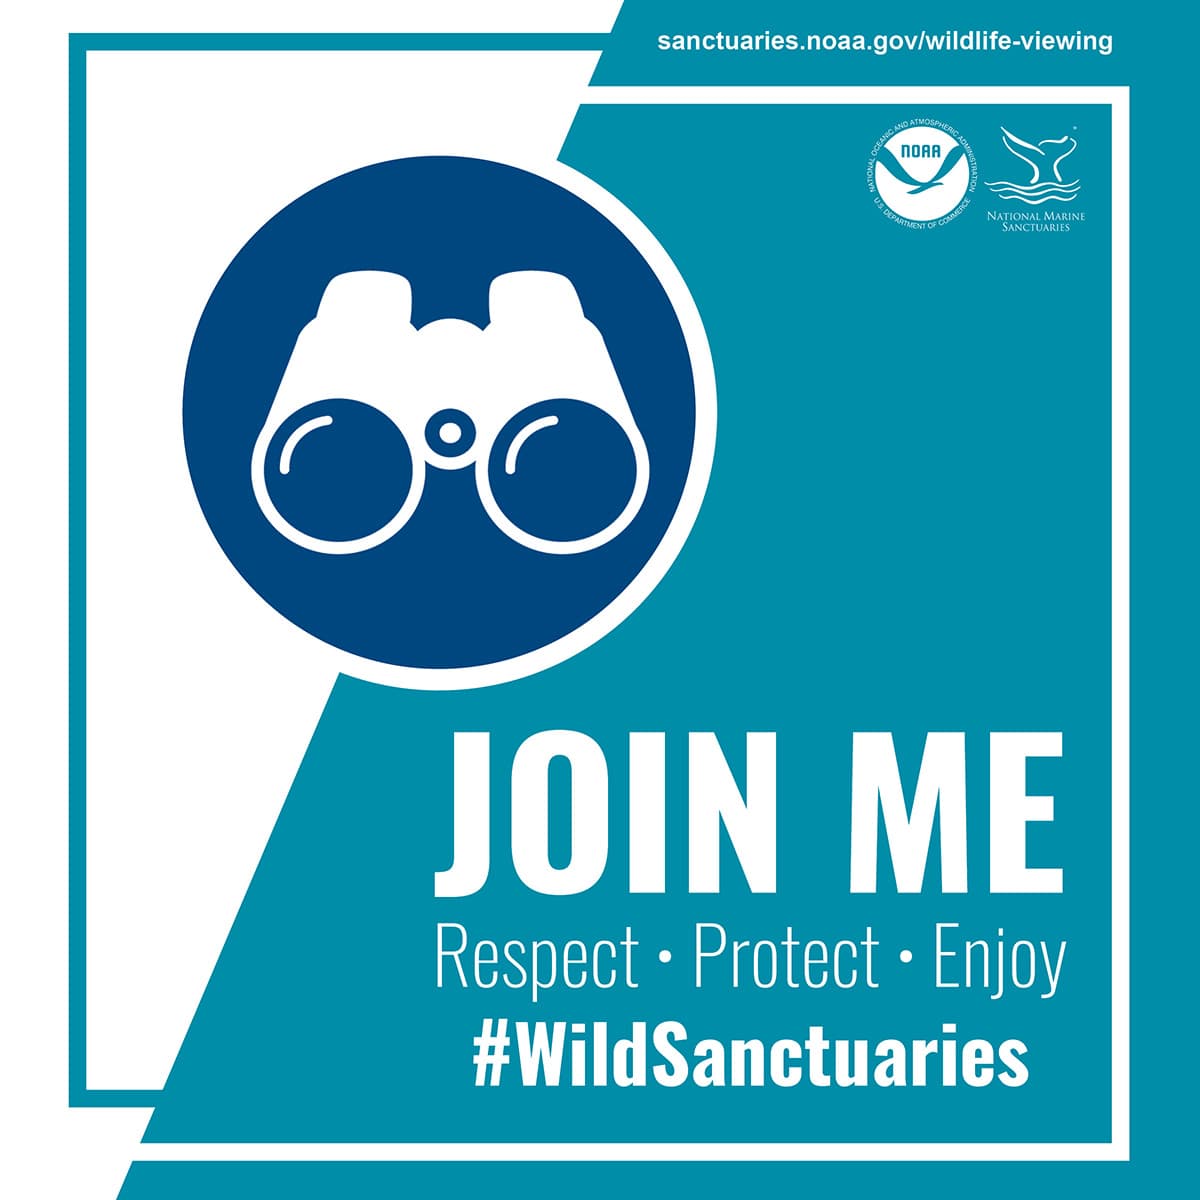 Join me: respect, protect, enjoy wild sanctuaries